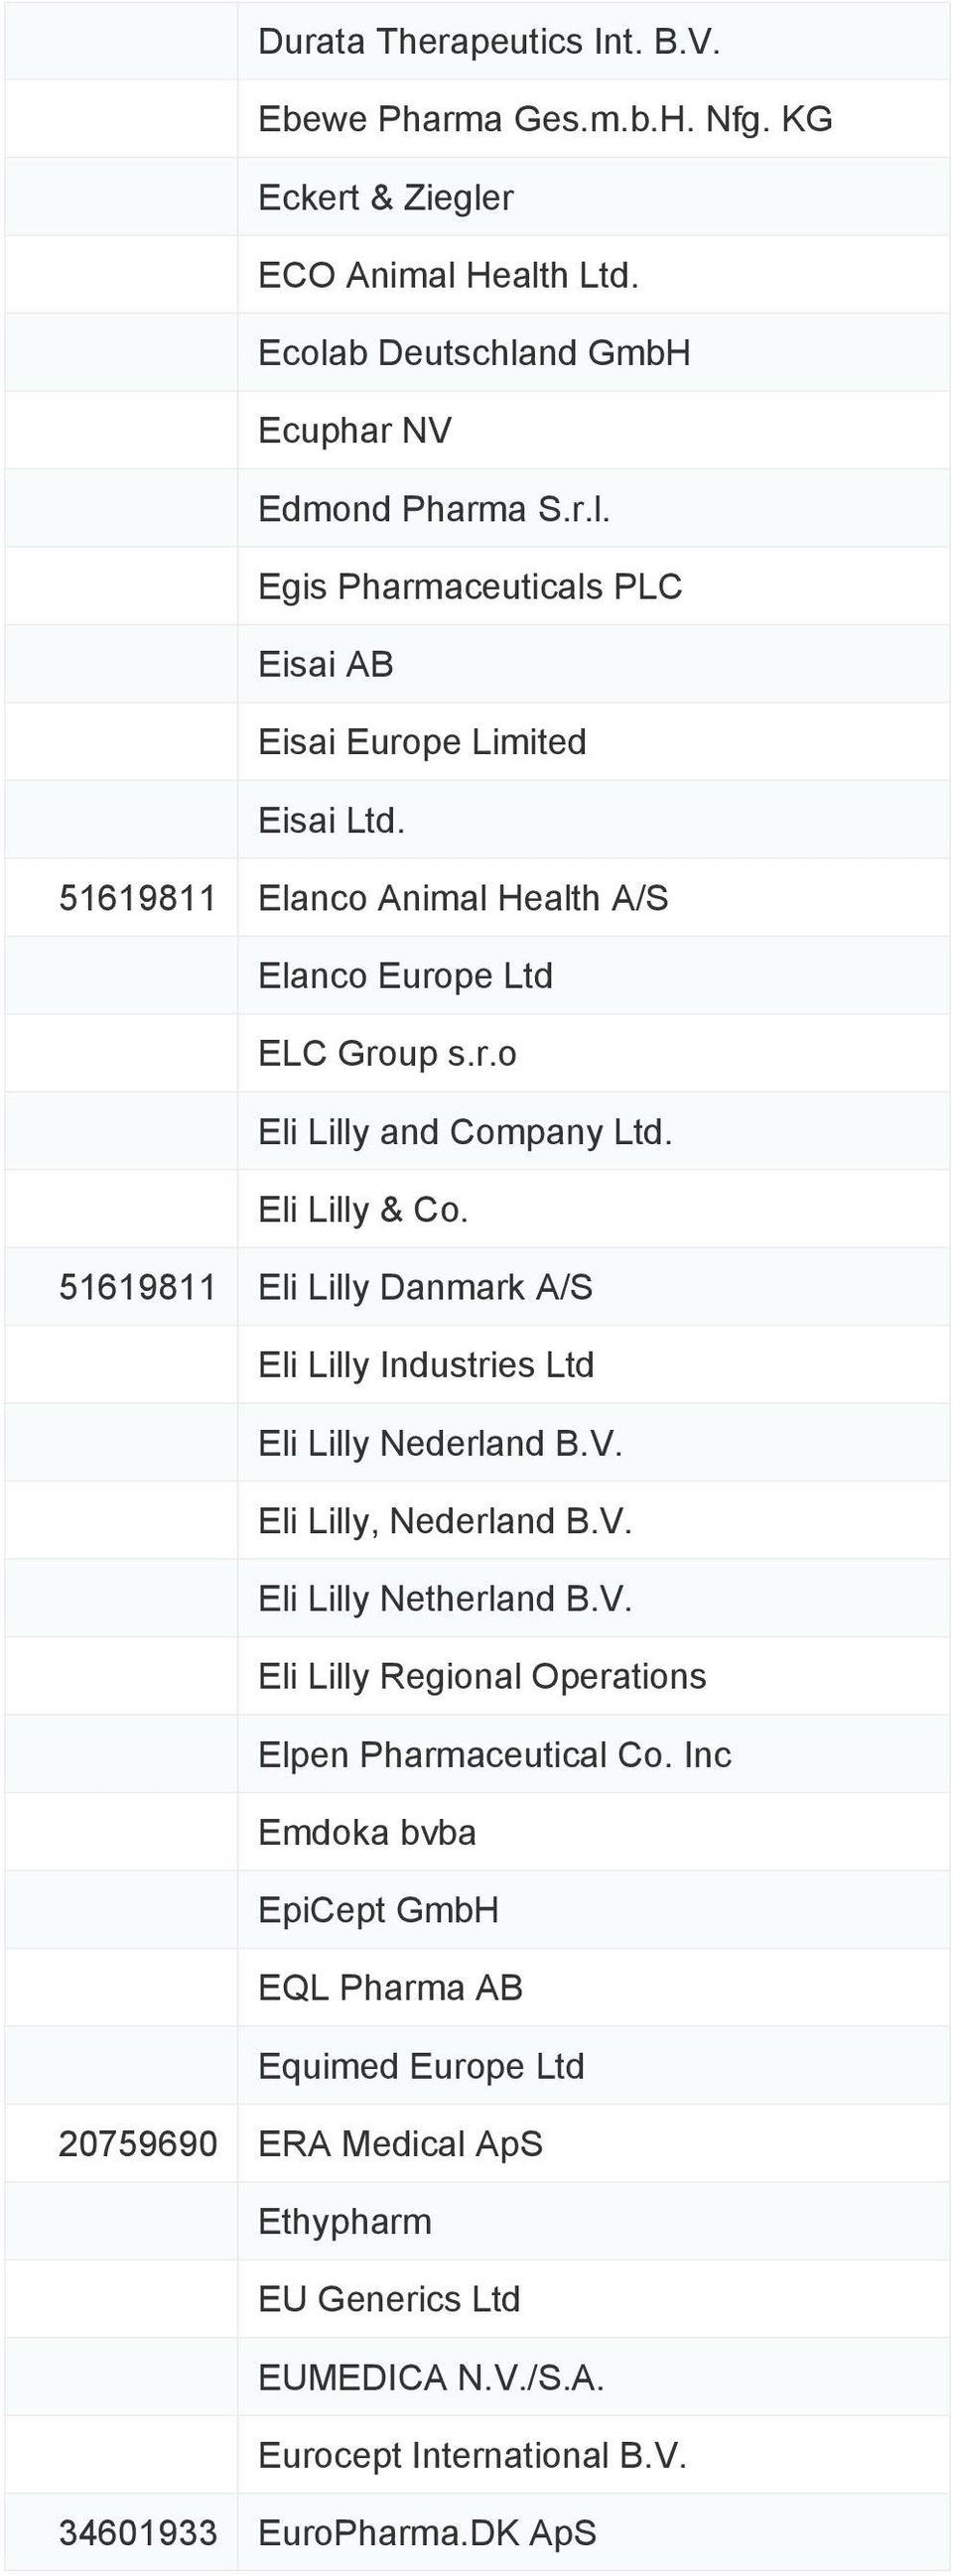 51619811 Eli Lilly Danmark A/S Eli Lilly Industries Ltd Eli Lilly Nederland B.V. Eli Lilly, Nederland B.V. Eli Lilly Netherland B.V. Eli Lilly Regional Operations Elpen Pharmaceutical Co.